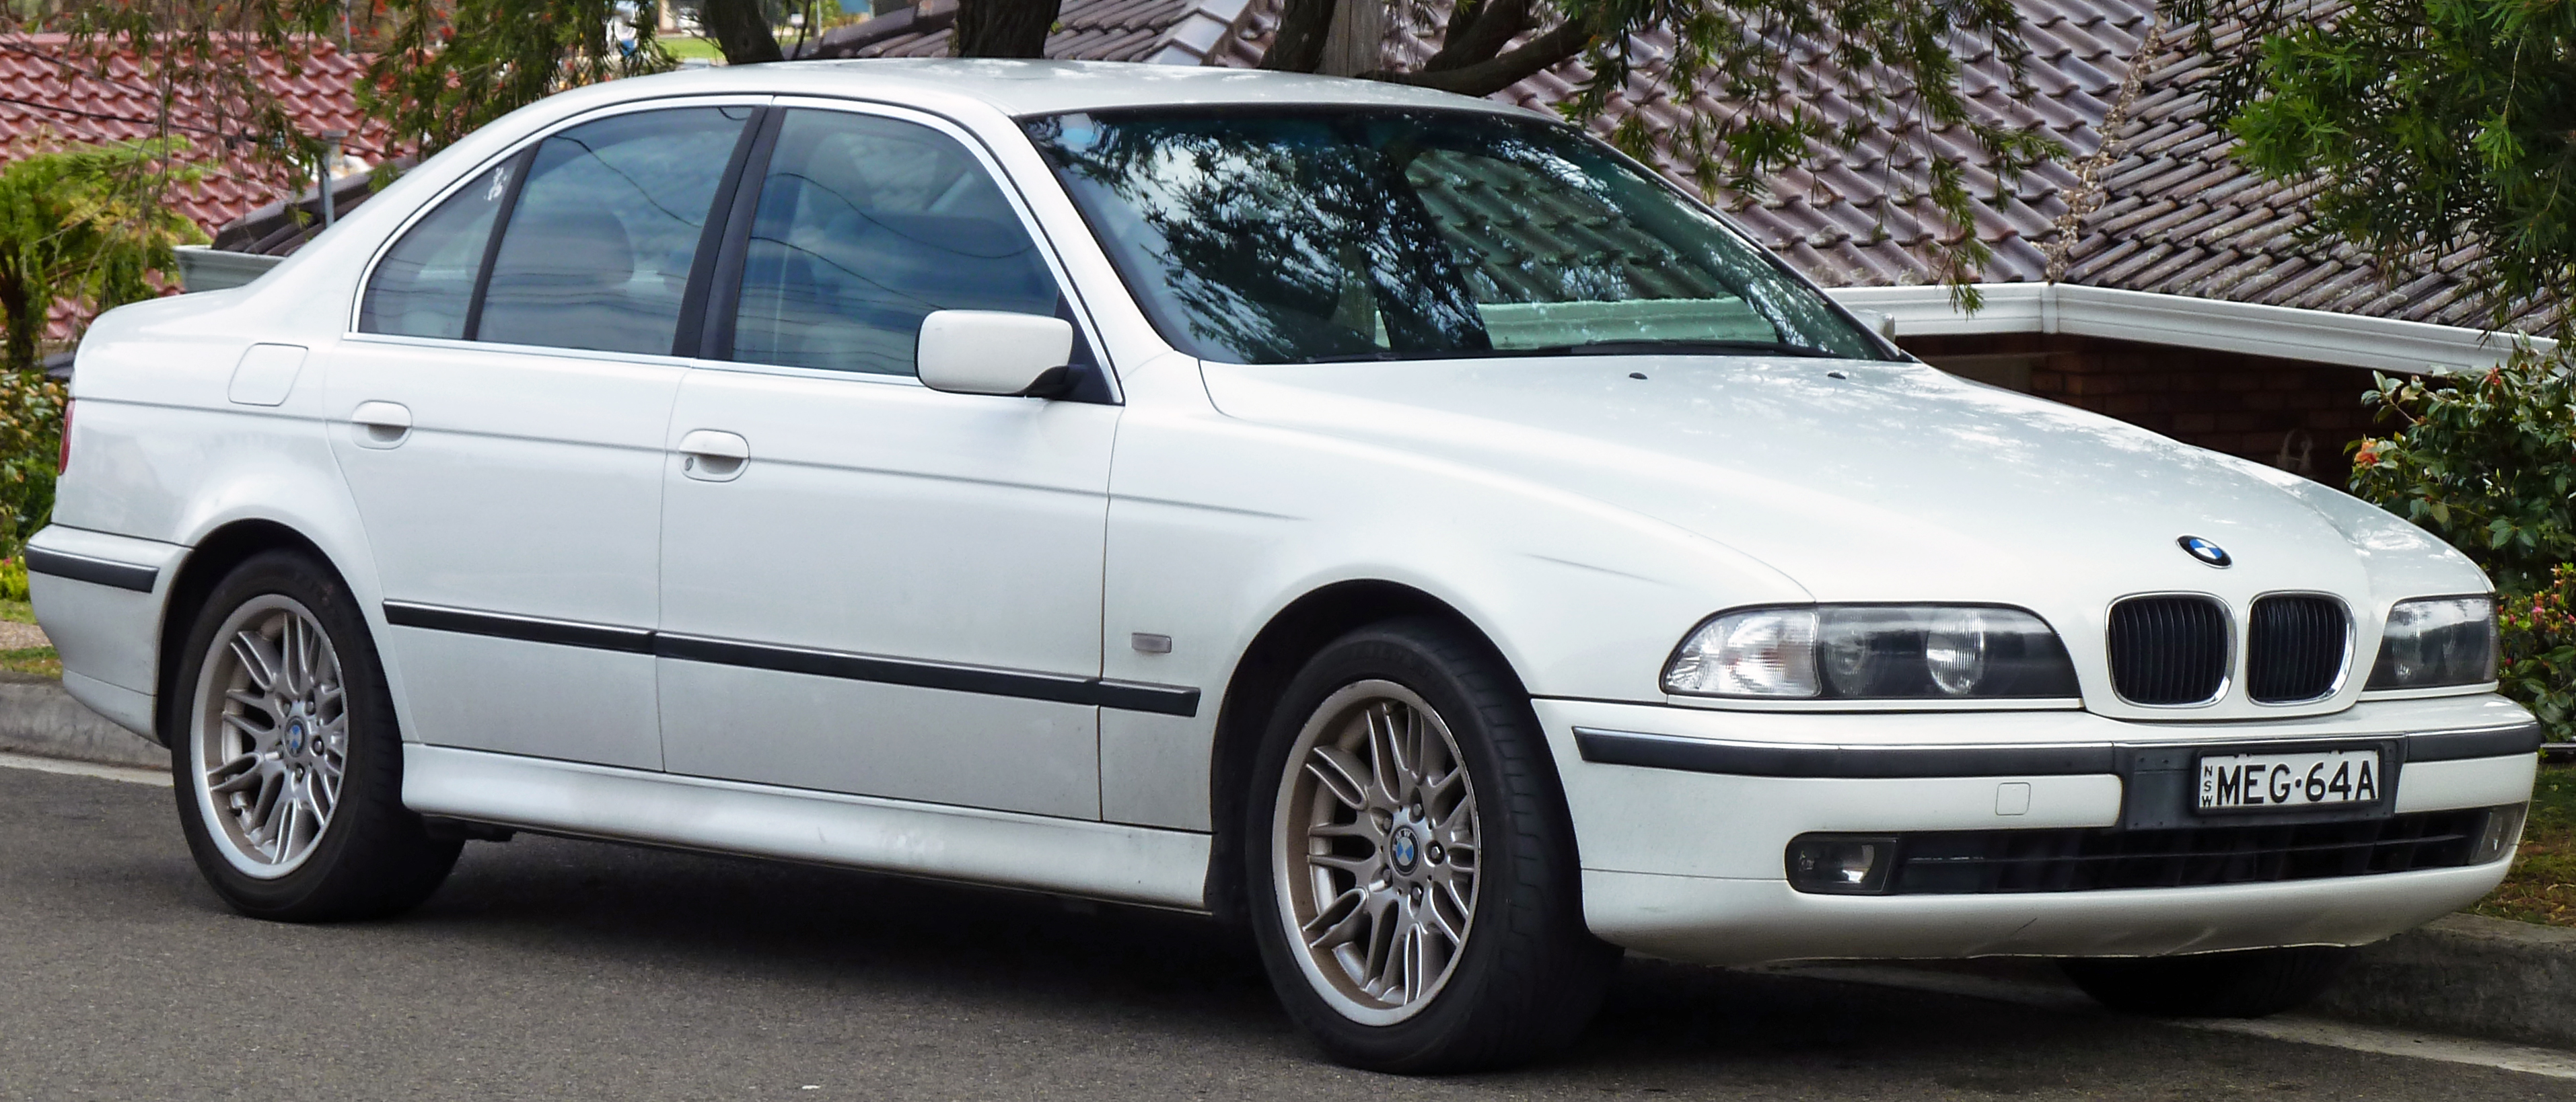 File:1996-2000 BMW 523i (E39) sedan 02.jpg